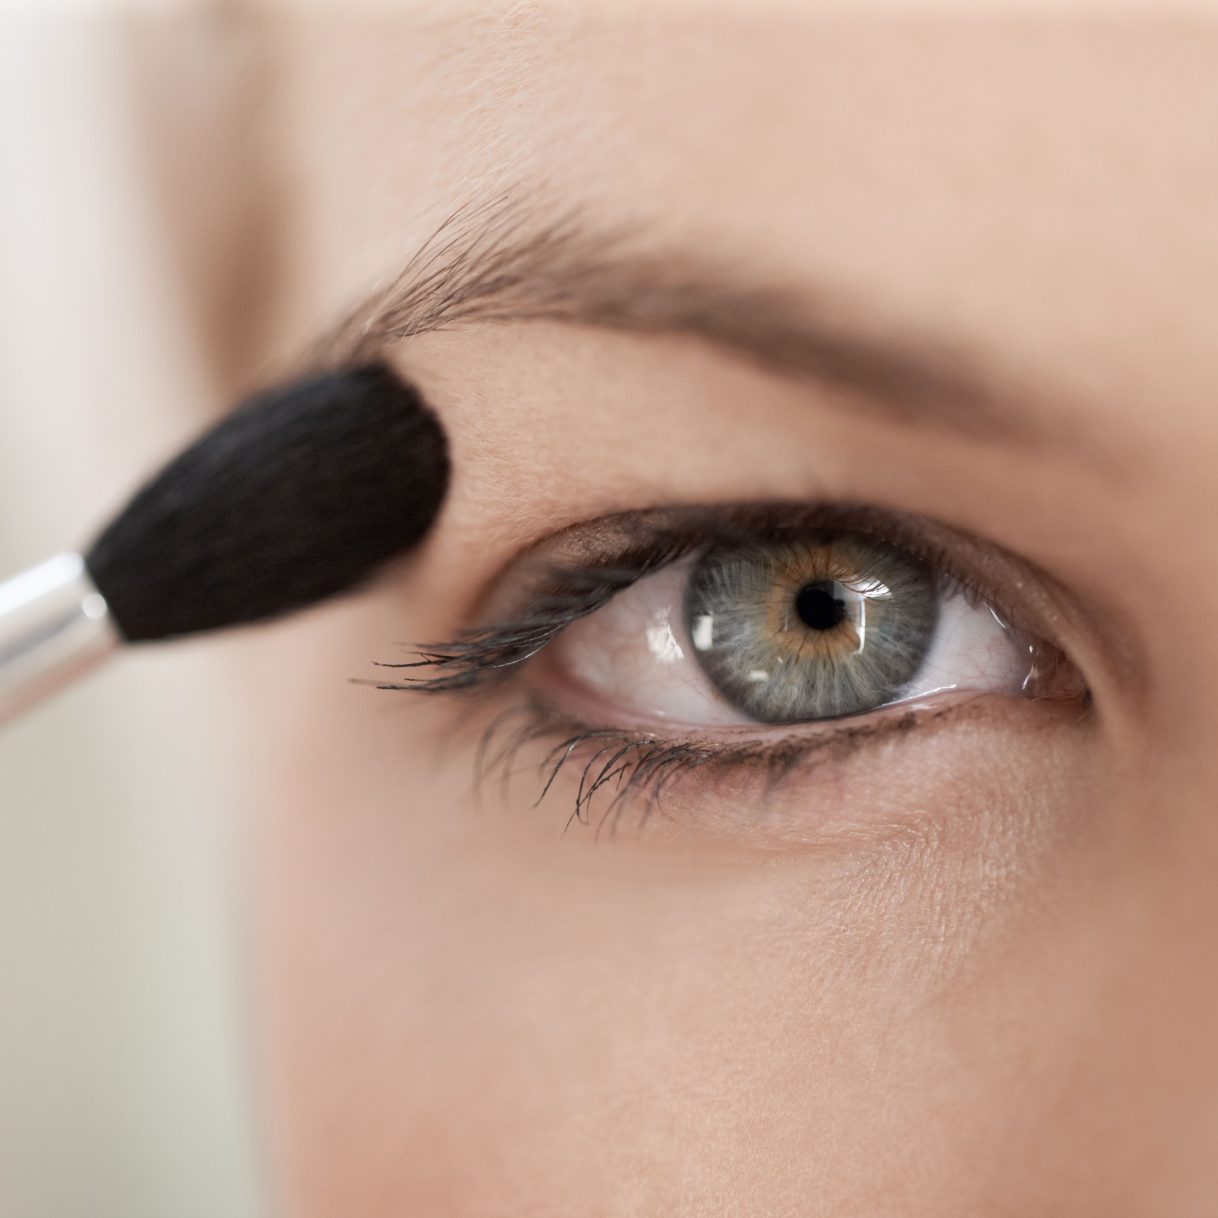 Makeup Tips For Blue Eyes And Fair Skin Makeup Tricks For Hooded Eyes Hooded Eyes Makeup Tips And Tricks